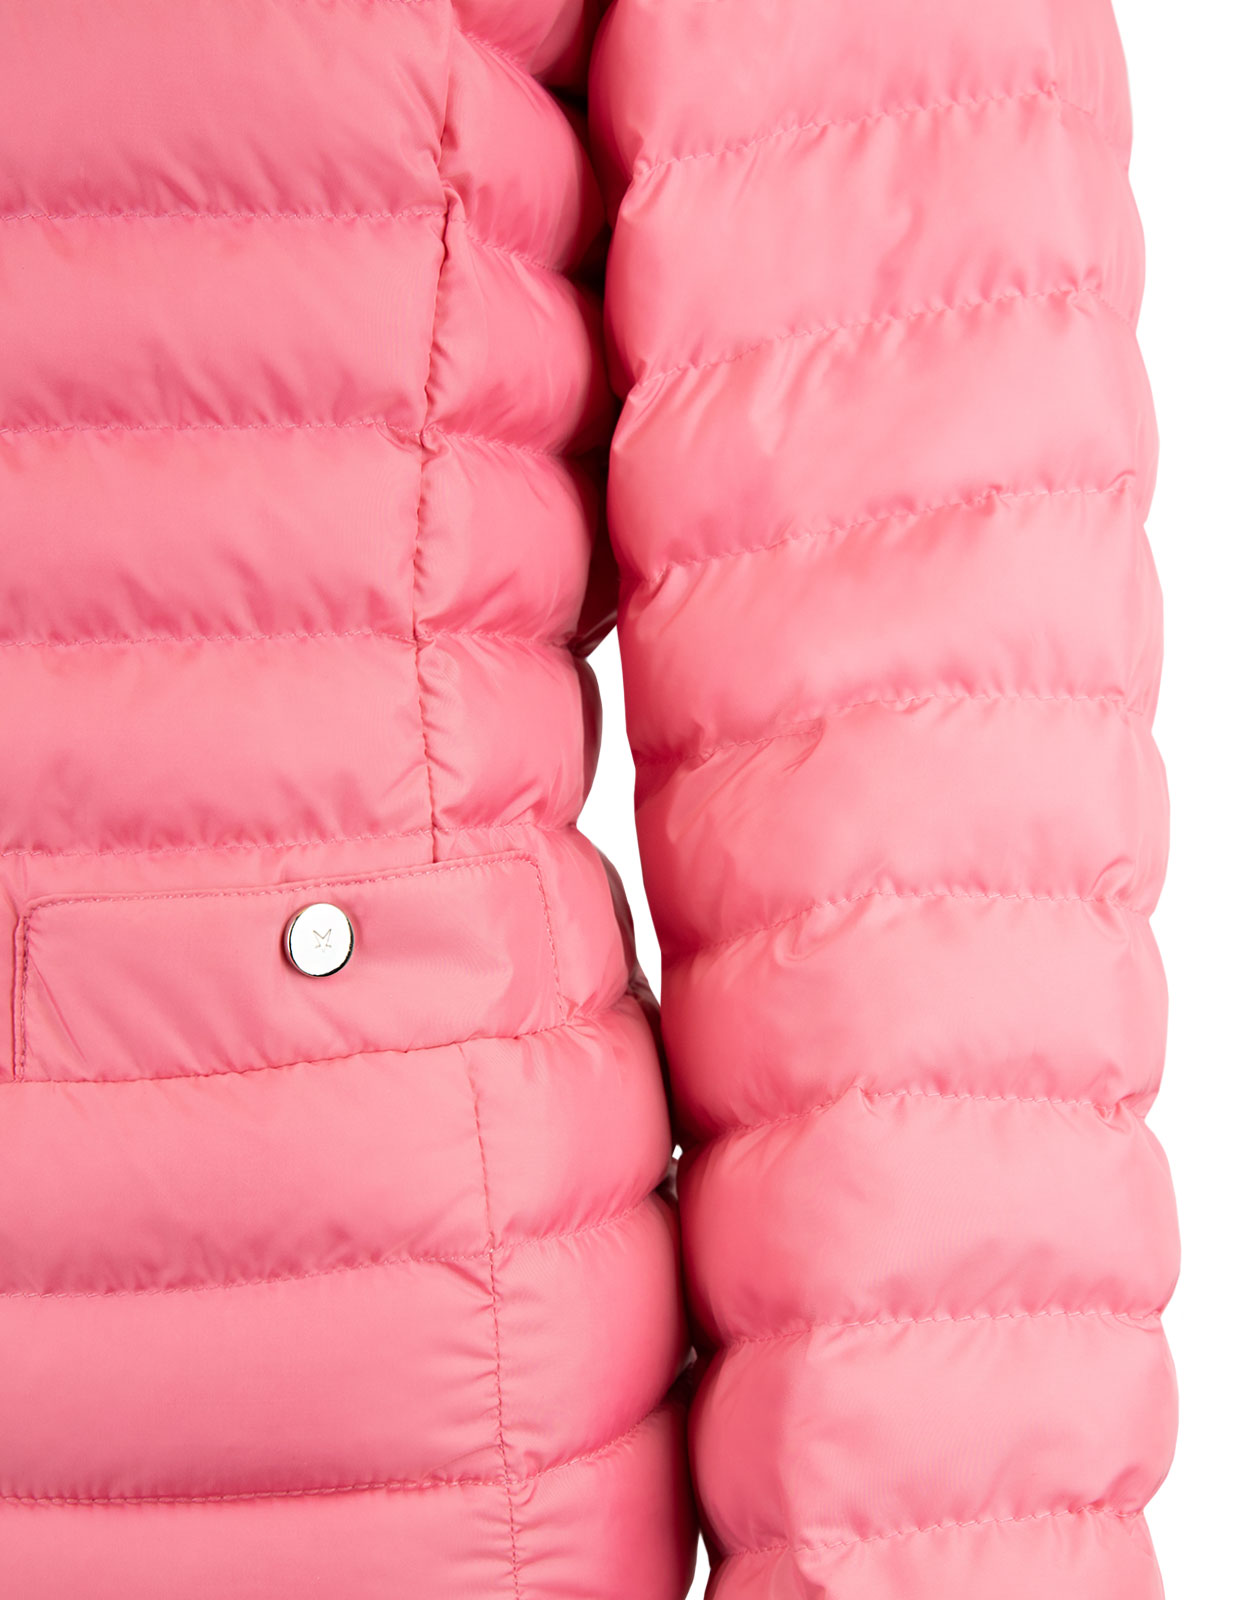 Puff Jacket Pink